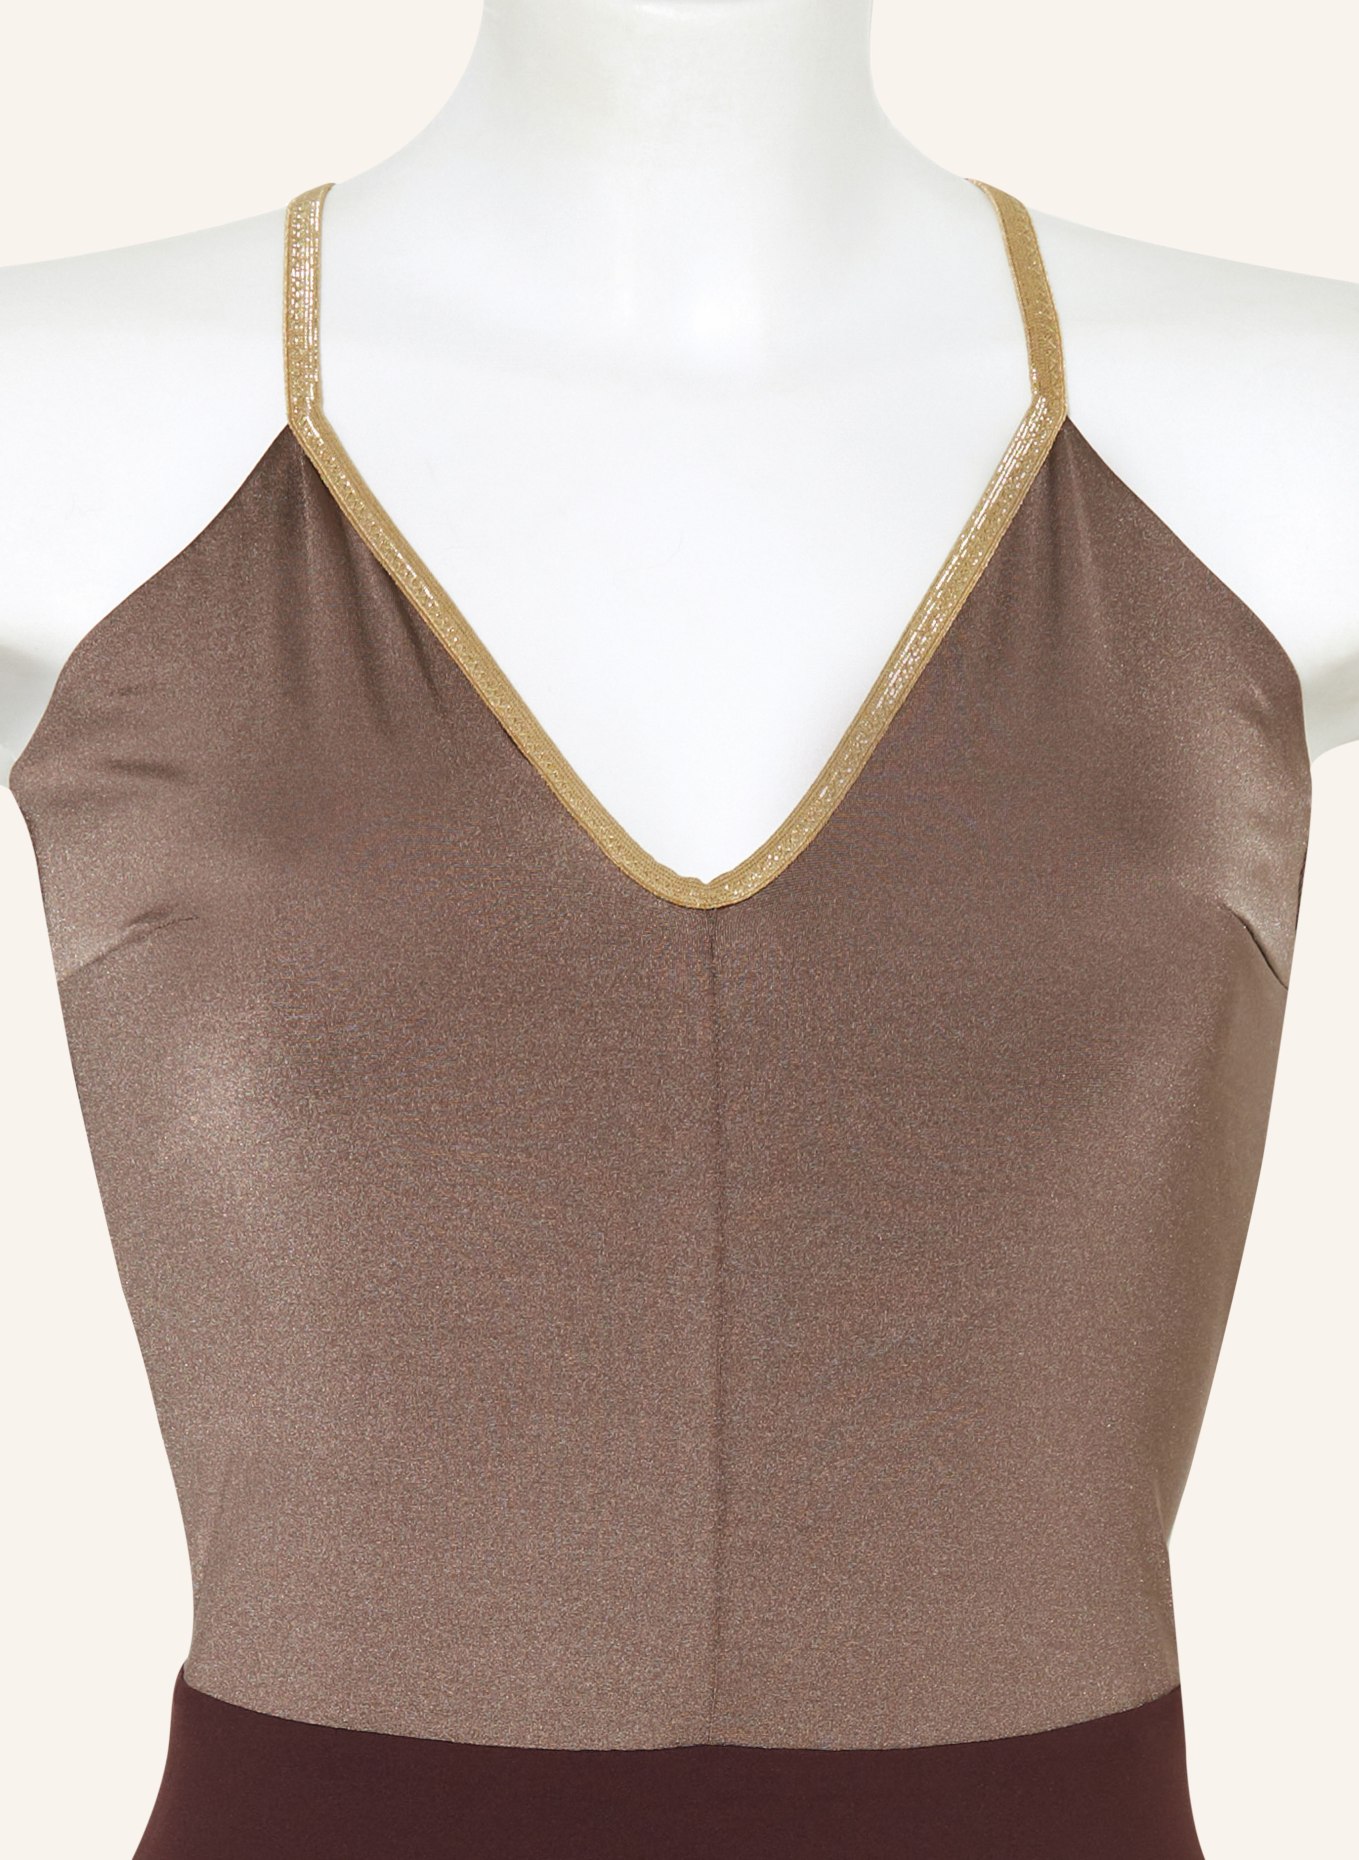 MYMARINI Reversible bralette bikini top SHINE with glitter thread in brown